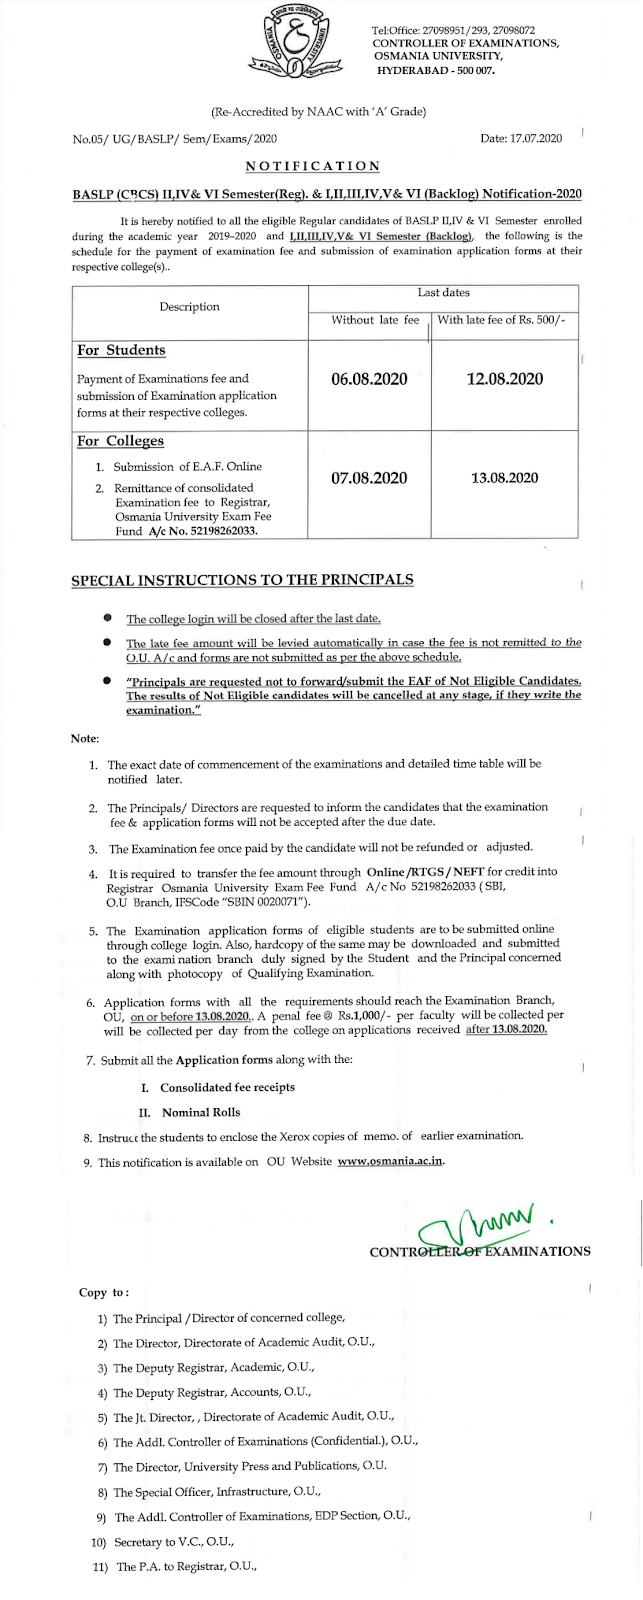 Osmania University BASLP (CBSE) Regular & Backlog July 2020 Exam Fee Notification